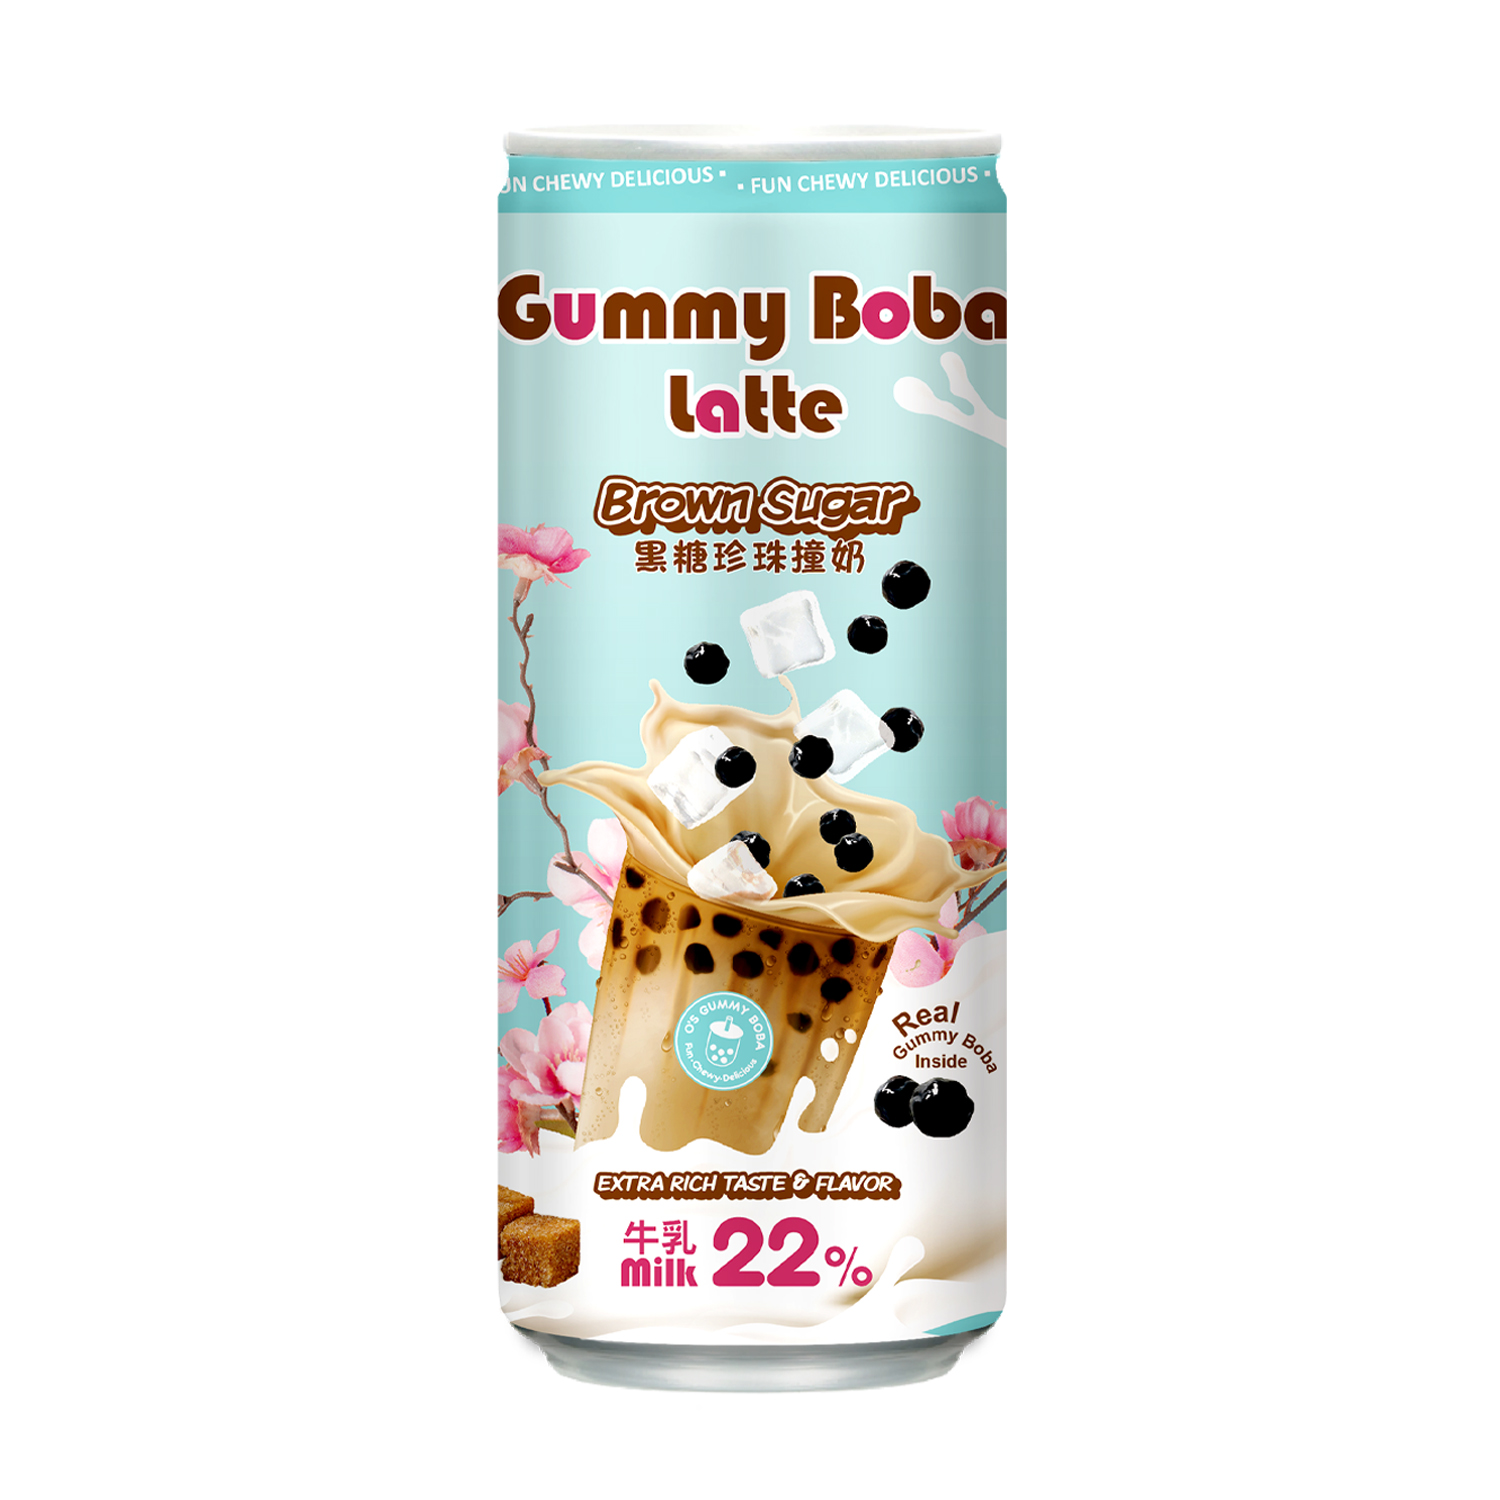 https://www.osbubble.com/wp-content/uploads/2021/07/20220916_gummy_boba_latte_front_brown_sugar.jpg